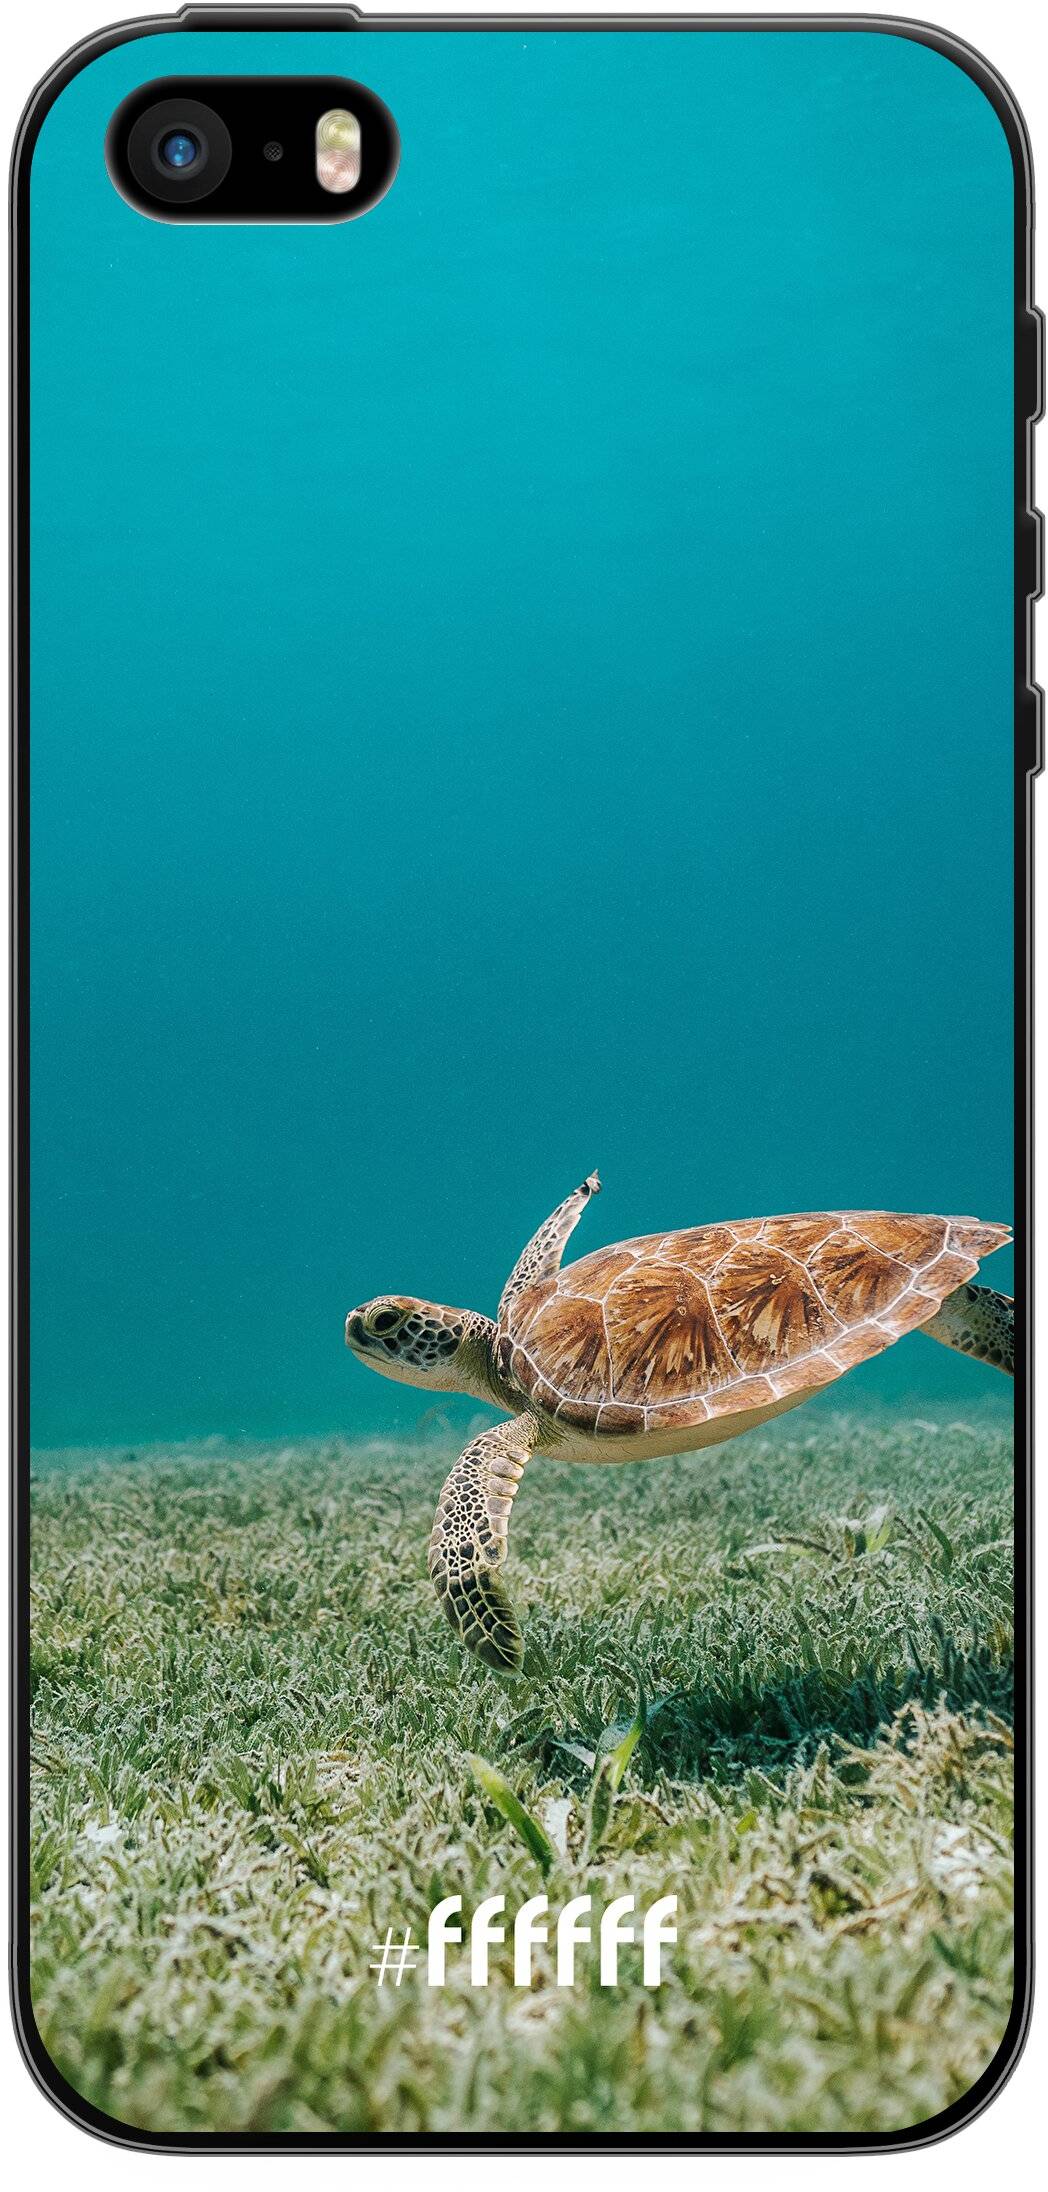 Turtle iPhone 5